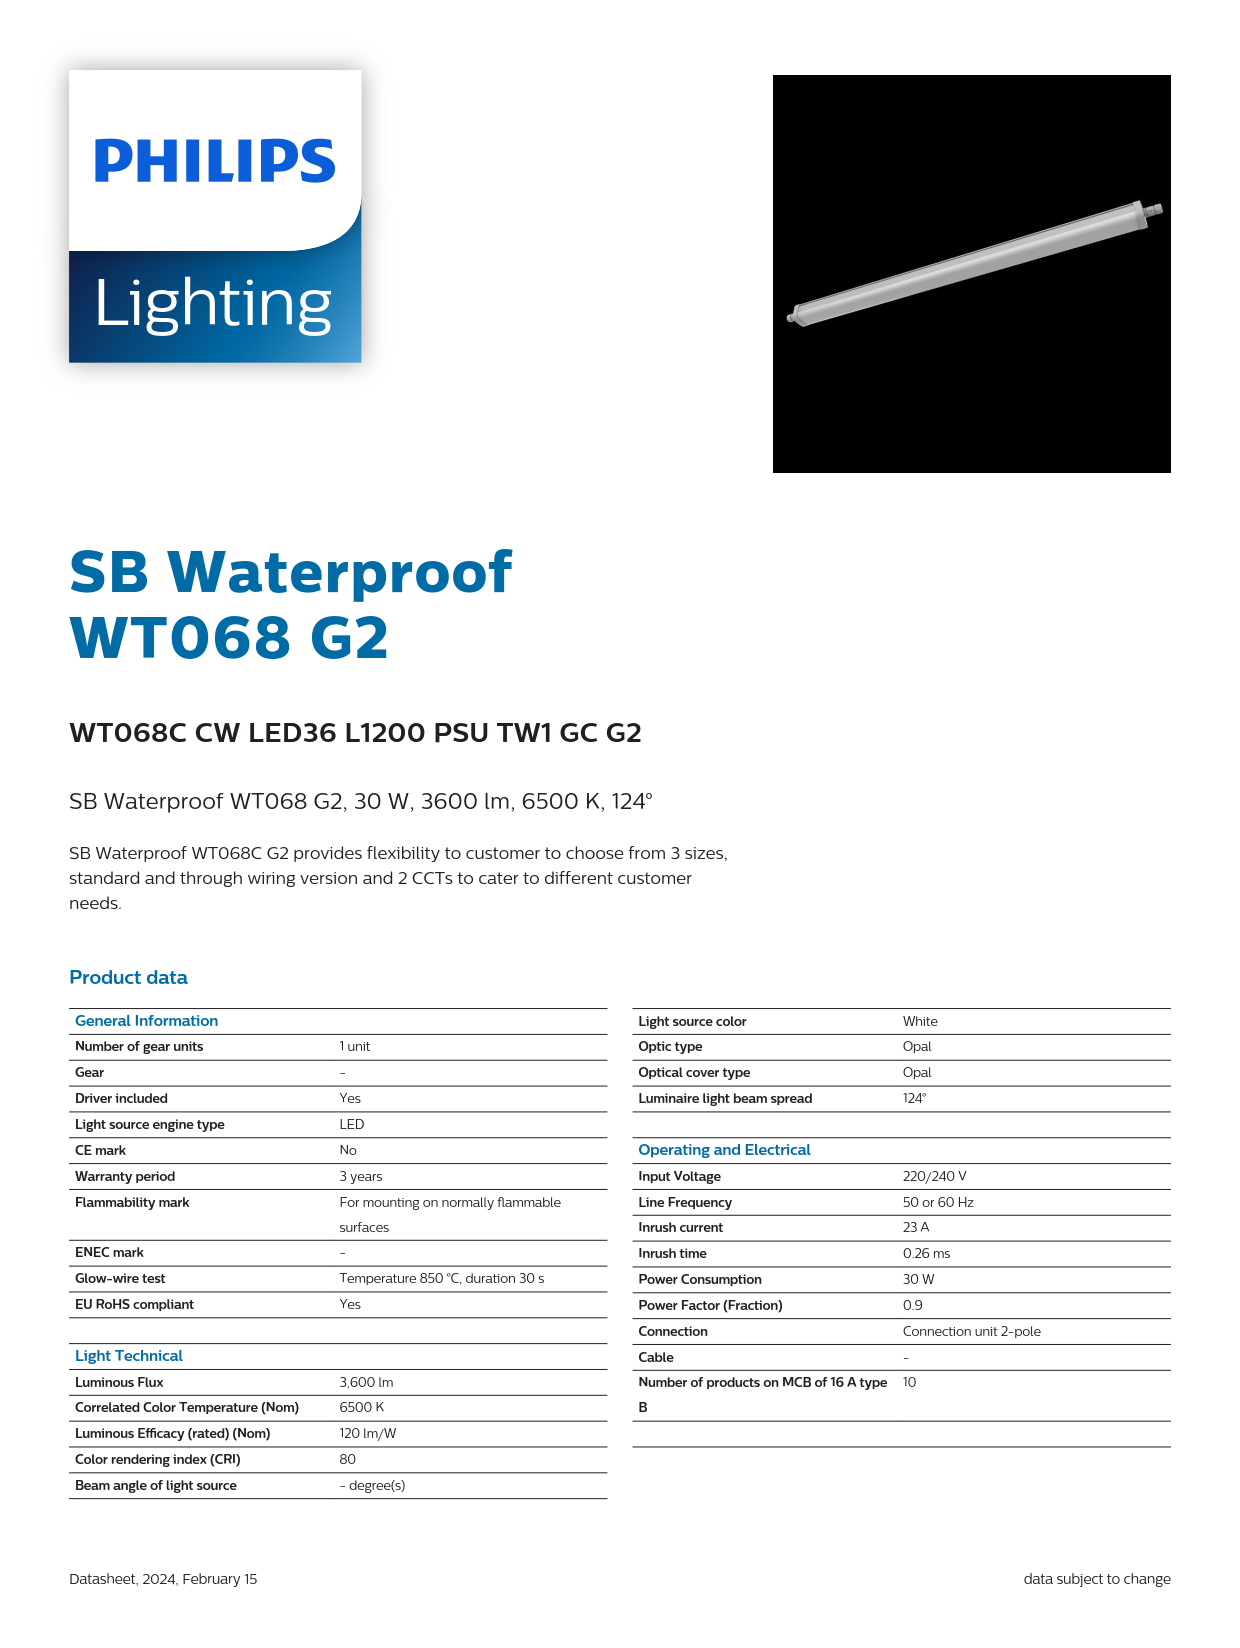 PHILIPS Waterproof Fixture light WT068C CW LED36 L1200 PSU TW1 GC G2 911401862185